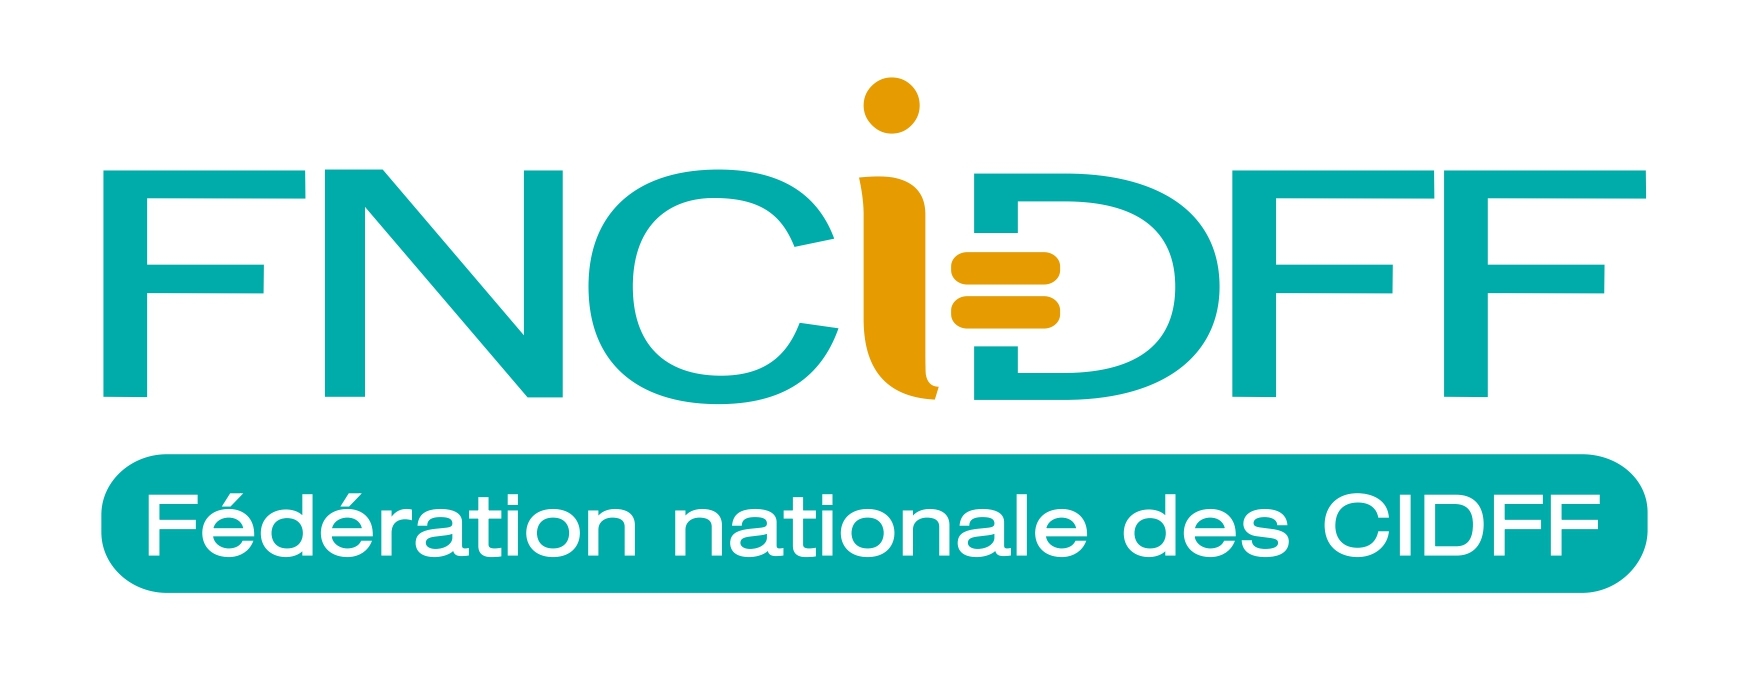 FNCIDFF logo_page-0001